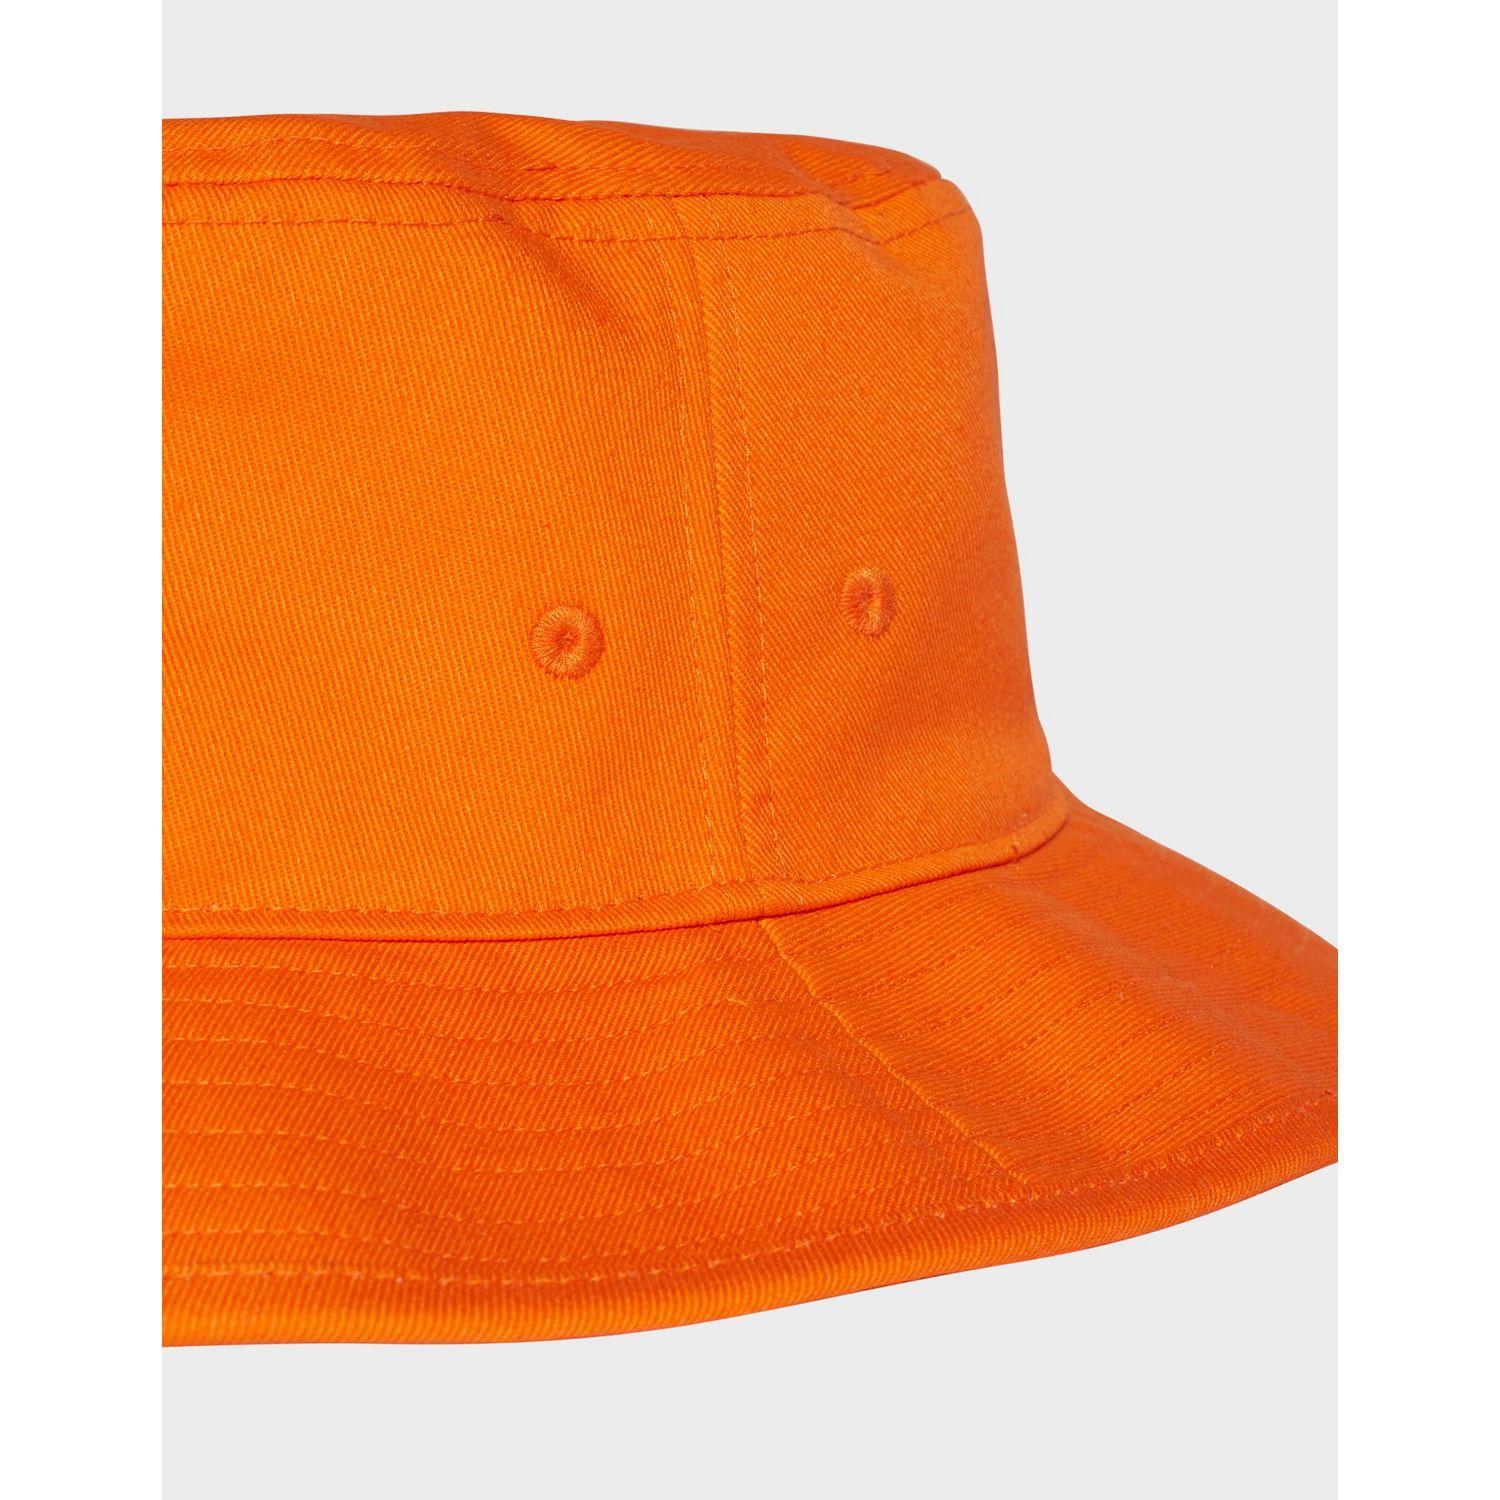 orange adidas bucket hat